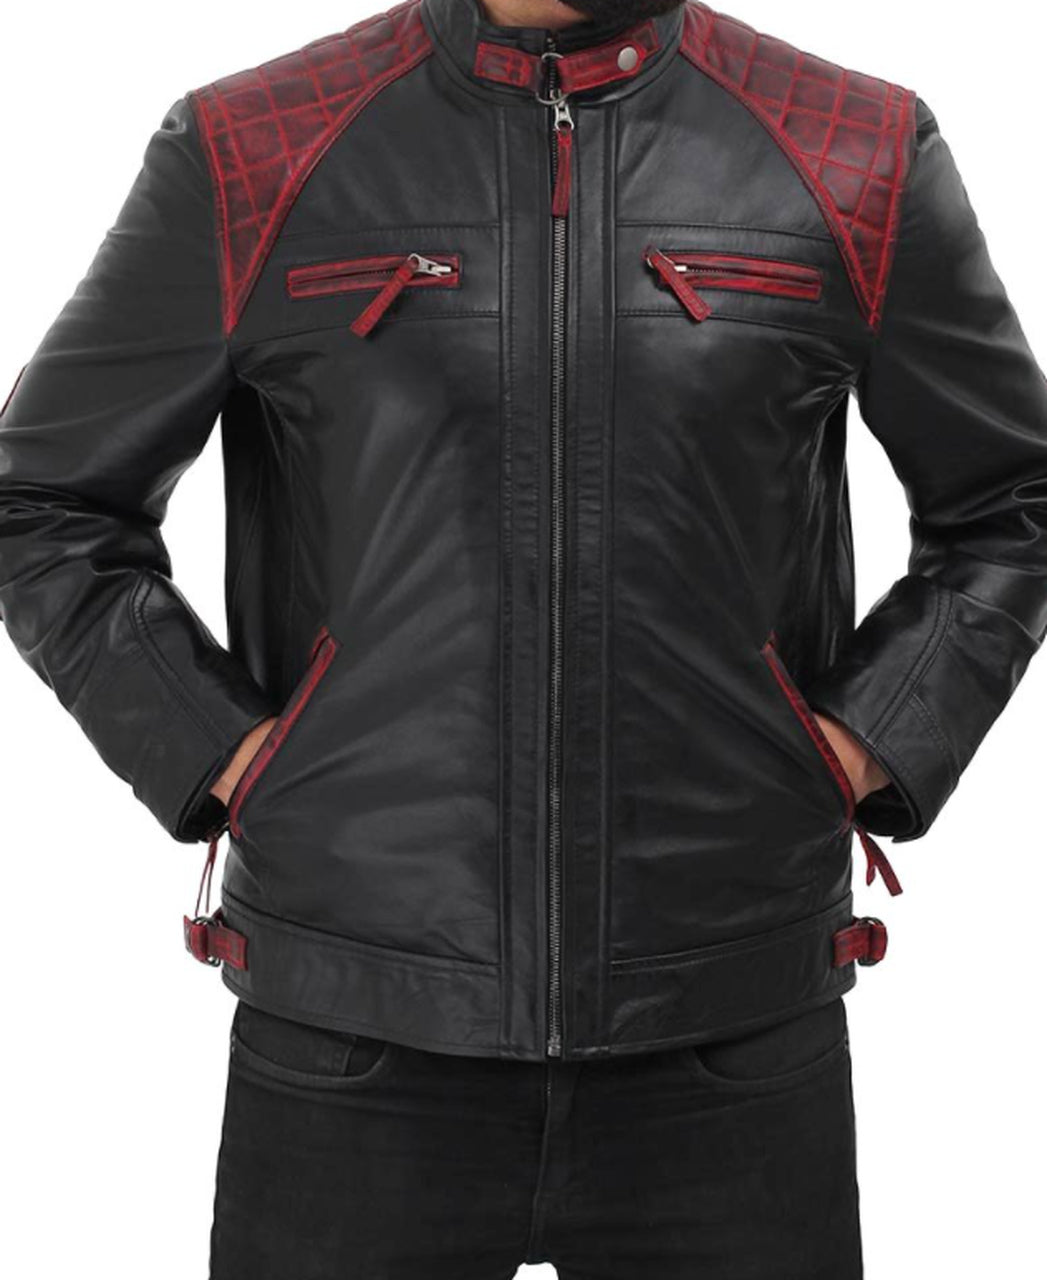 Men Black Genuine Leather Jacket With Stlyish Red Padding